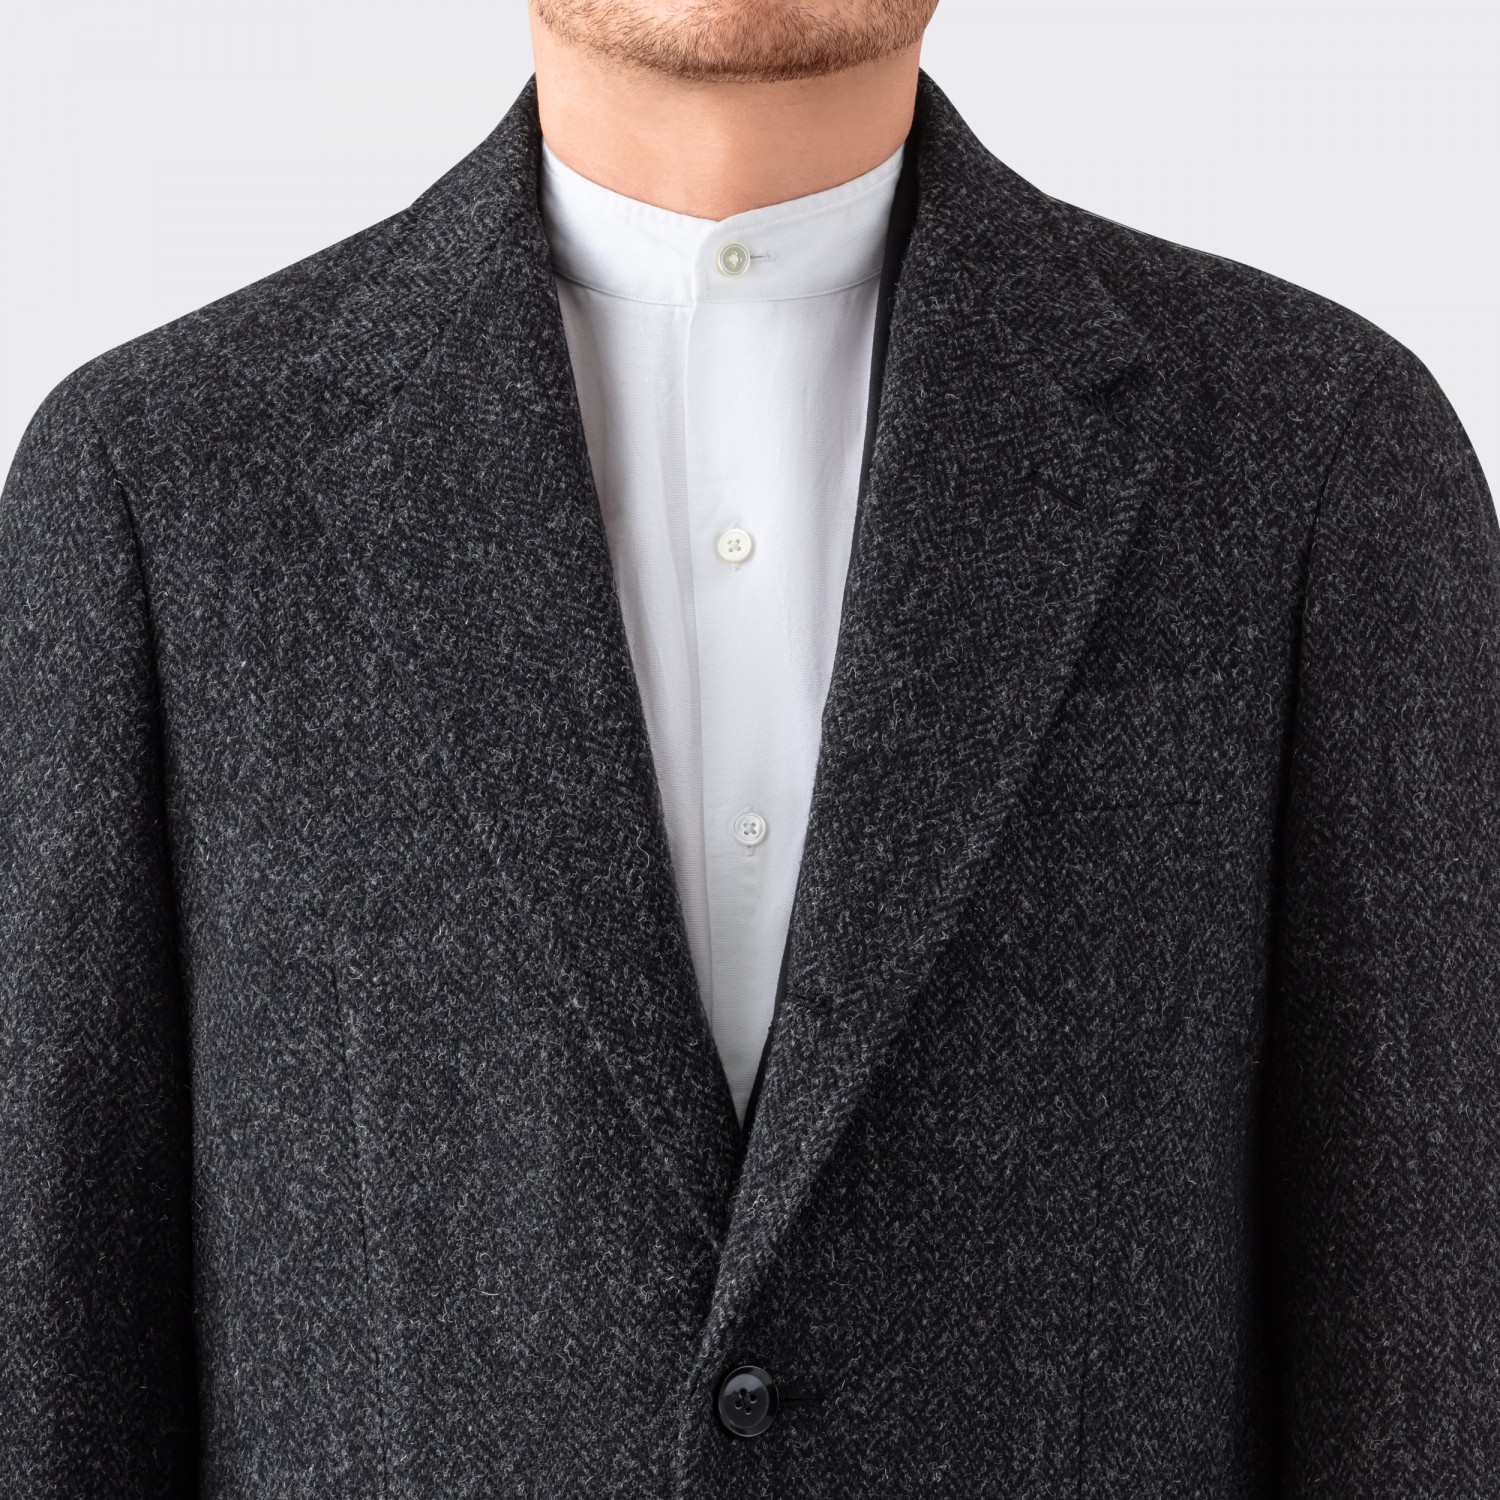 Ring Jacket : Harris Tweed Overcoat : Grey